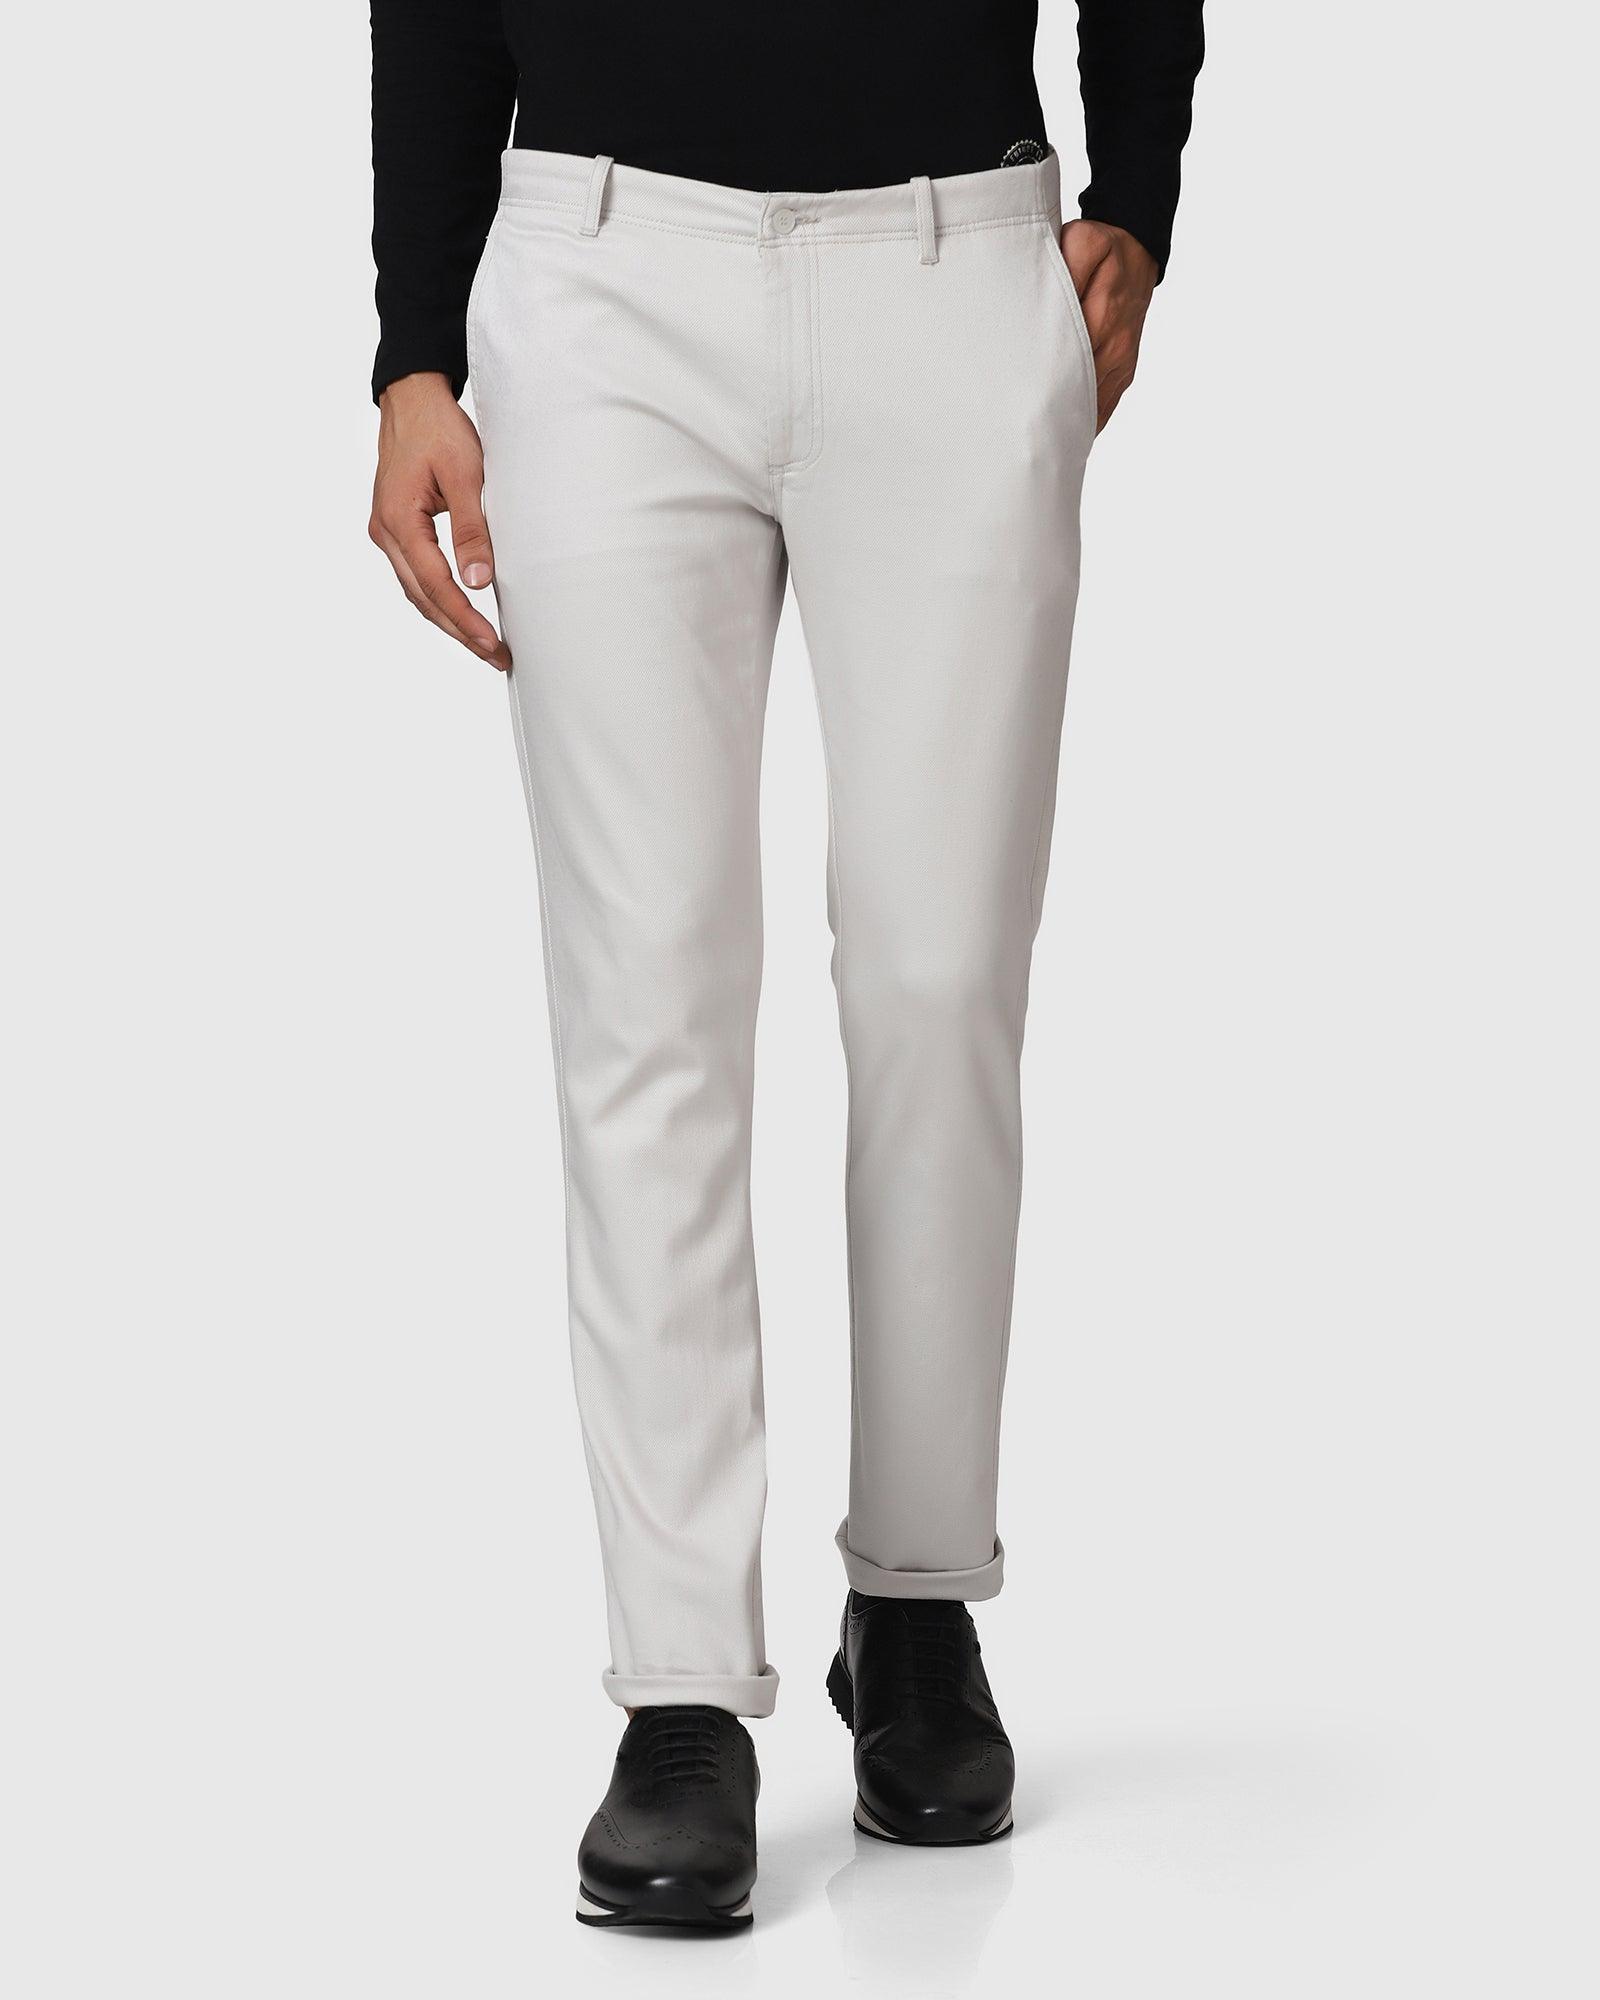 Slim Fit B-91 Casual Light Grey Textured Khakis - Regue